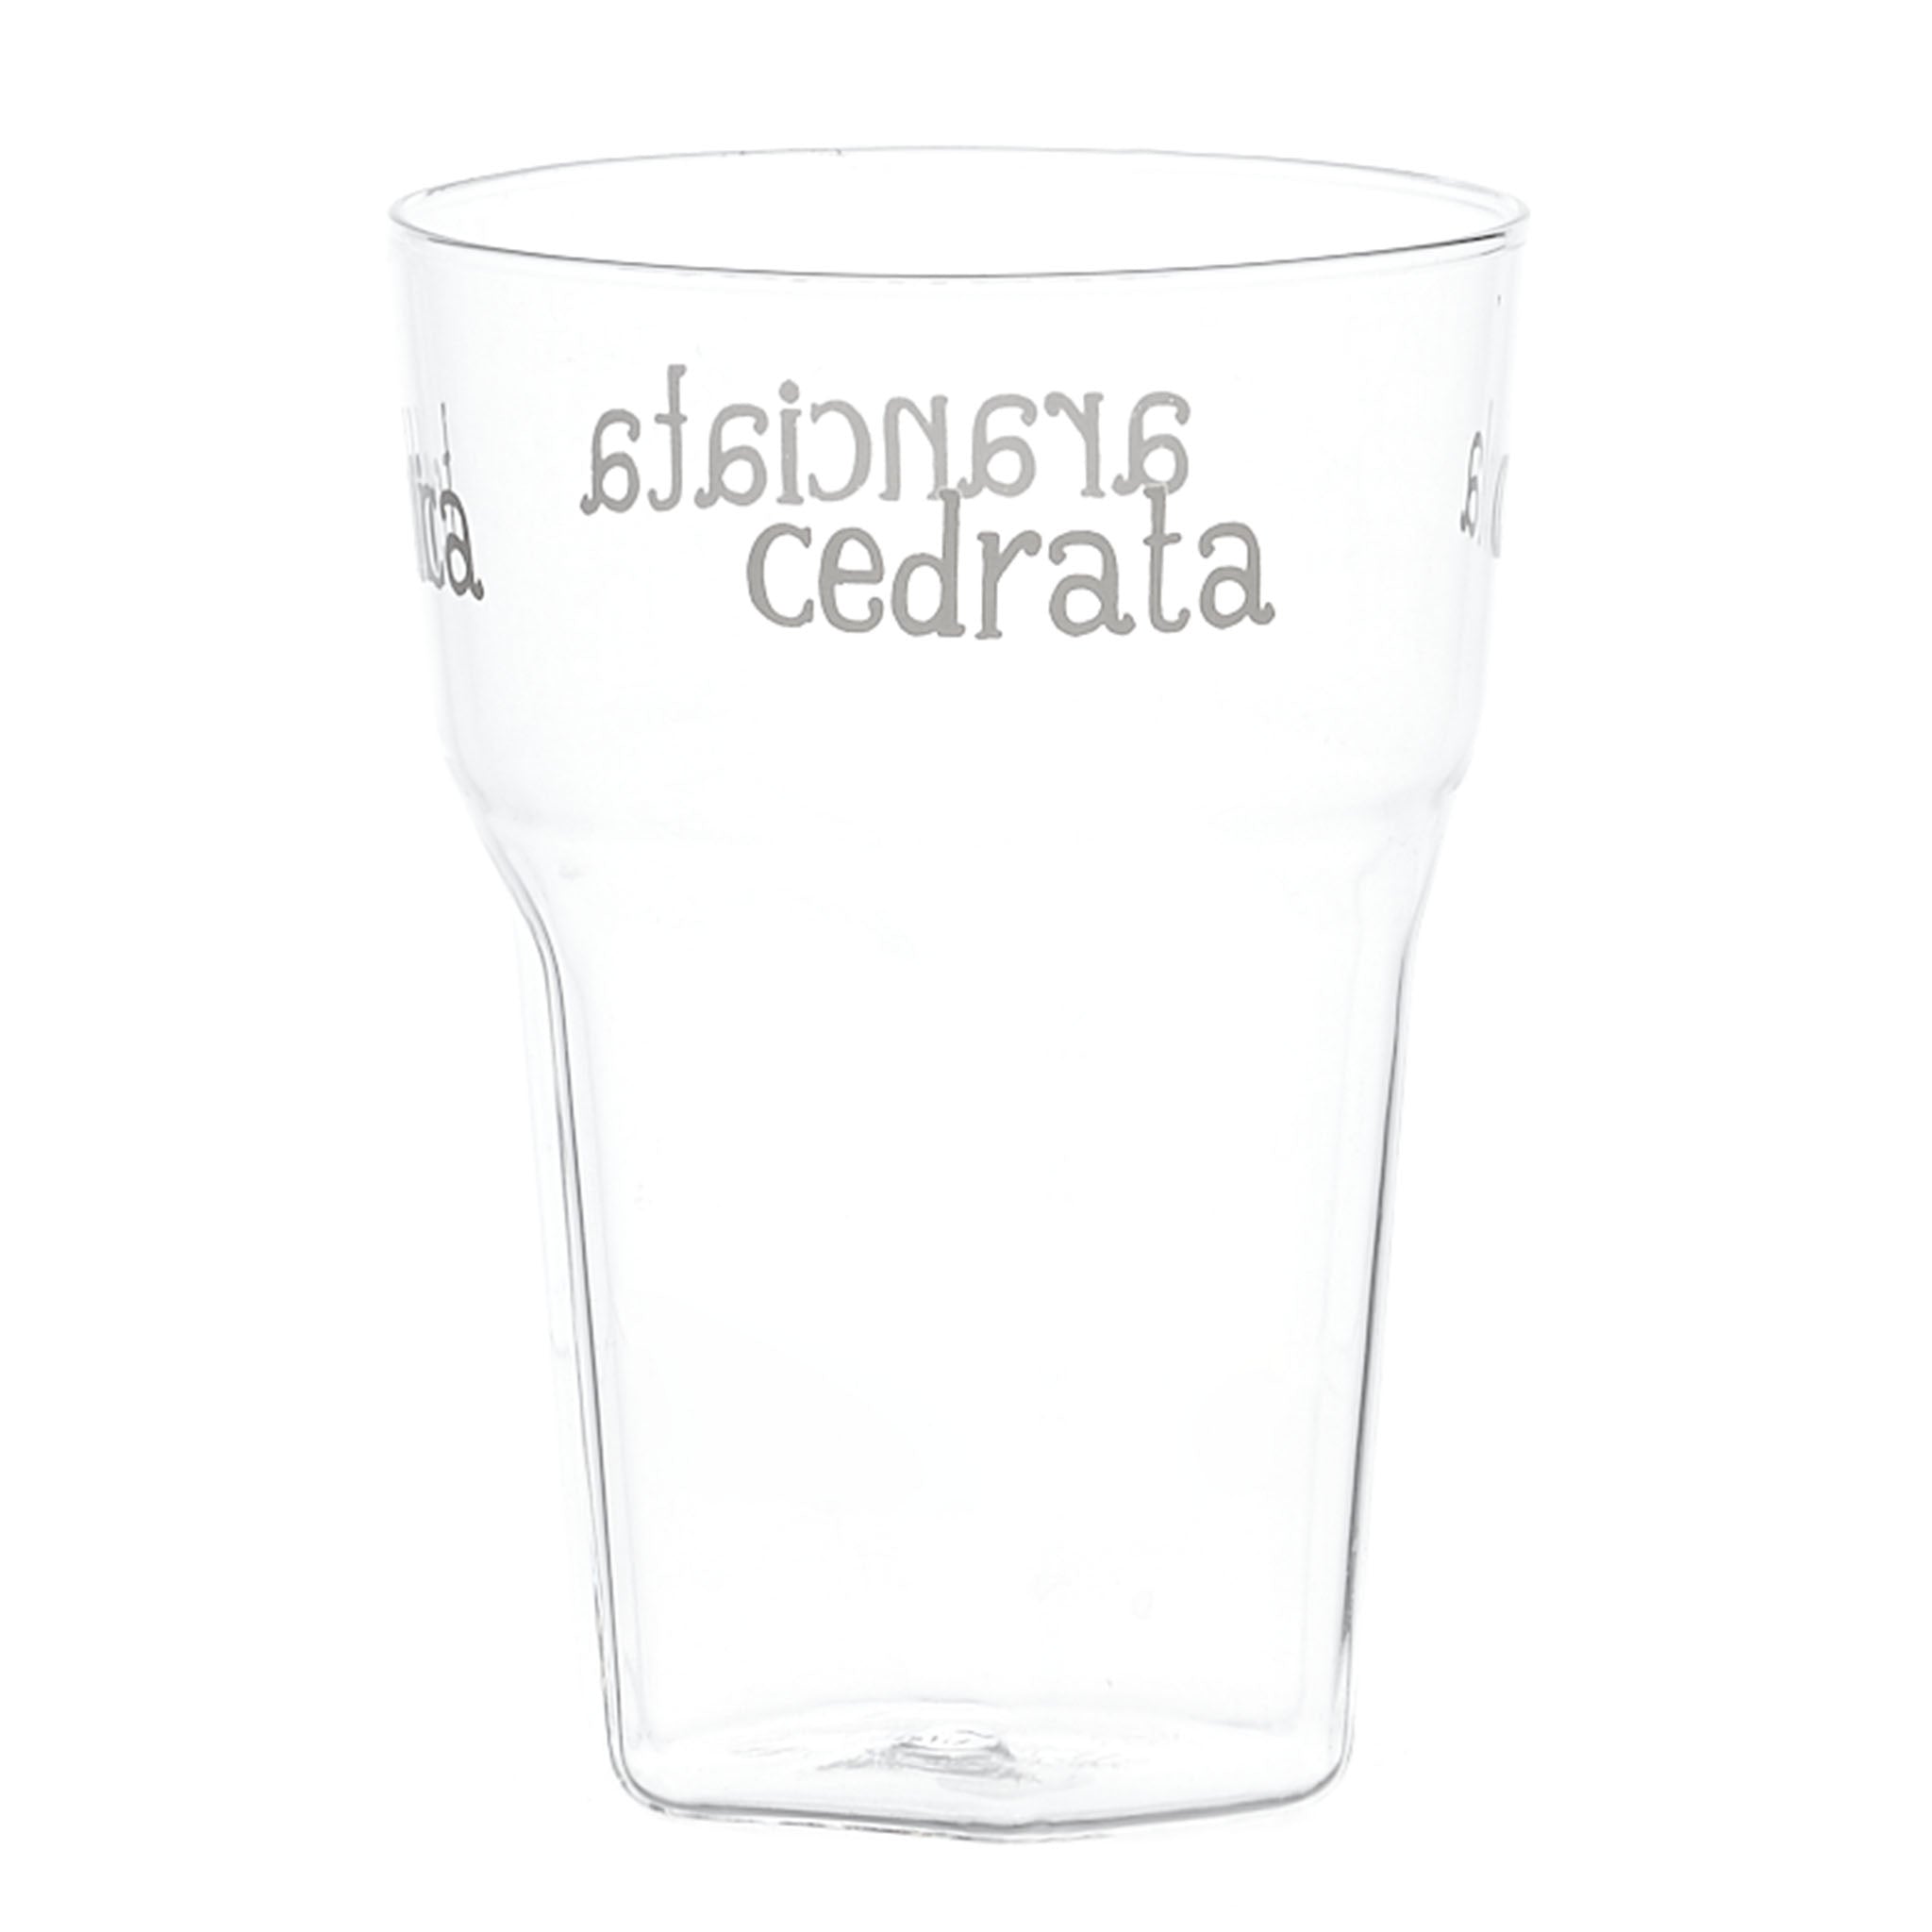 alkoholfreie Getränke "Cola - Tonica - Cedrata - Aranciata" 2er-Set